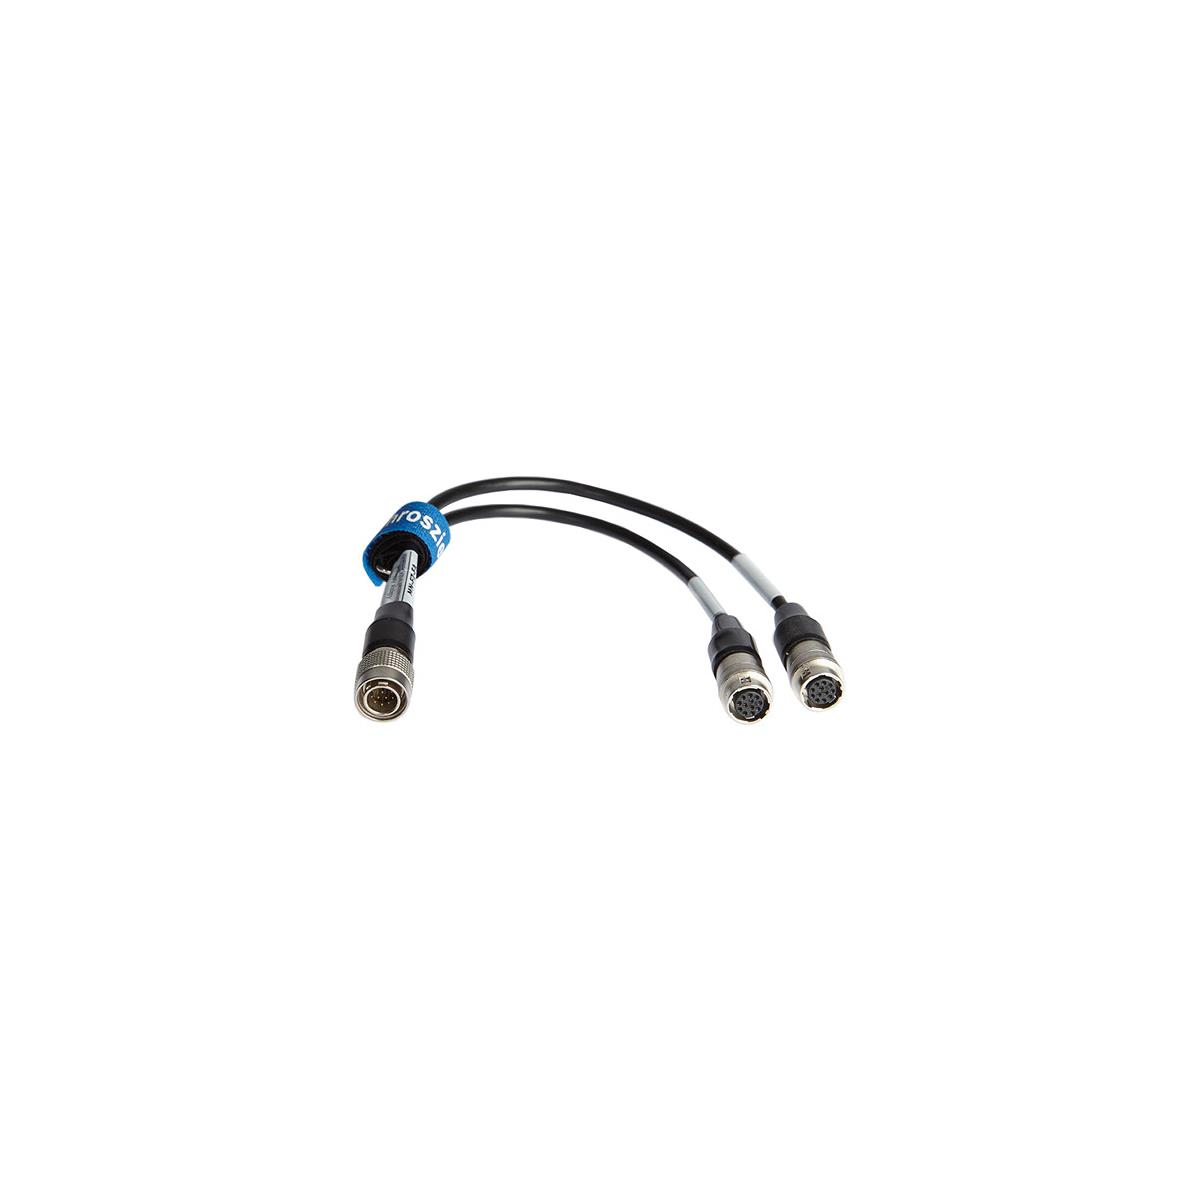 Image of Chrosziel MagNum Y-Cable for Fujinon Analog Focus/Zoom Demand